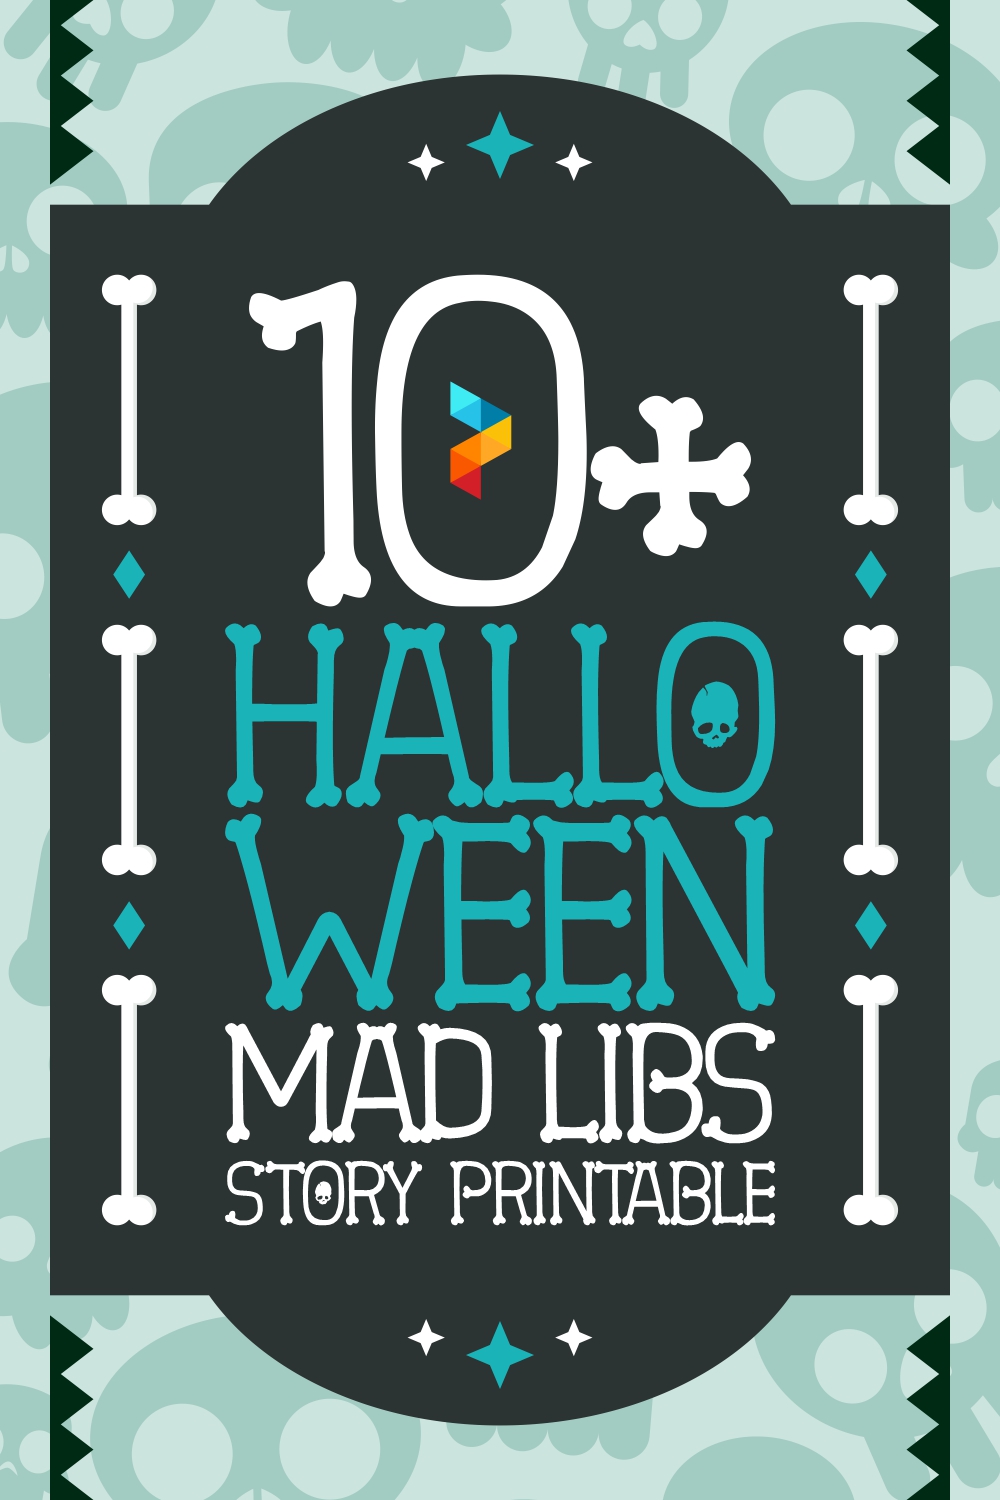 Halloween Mad Libs Story